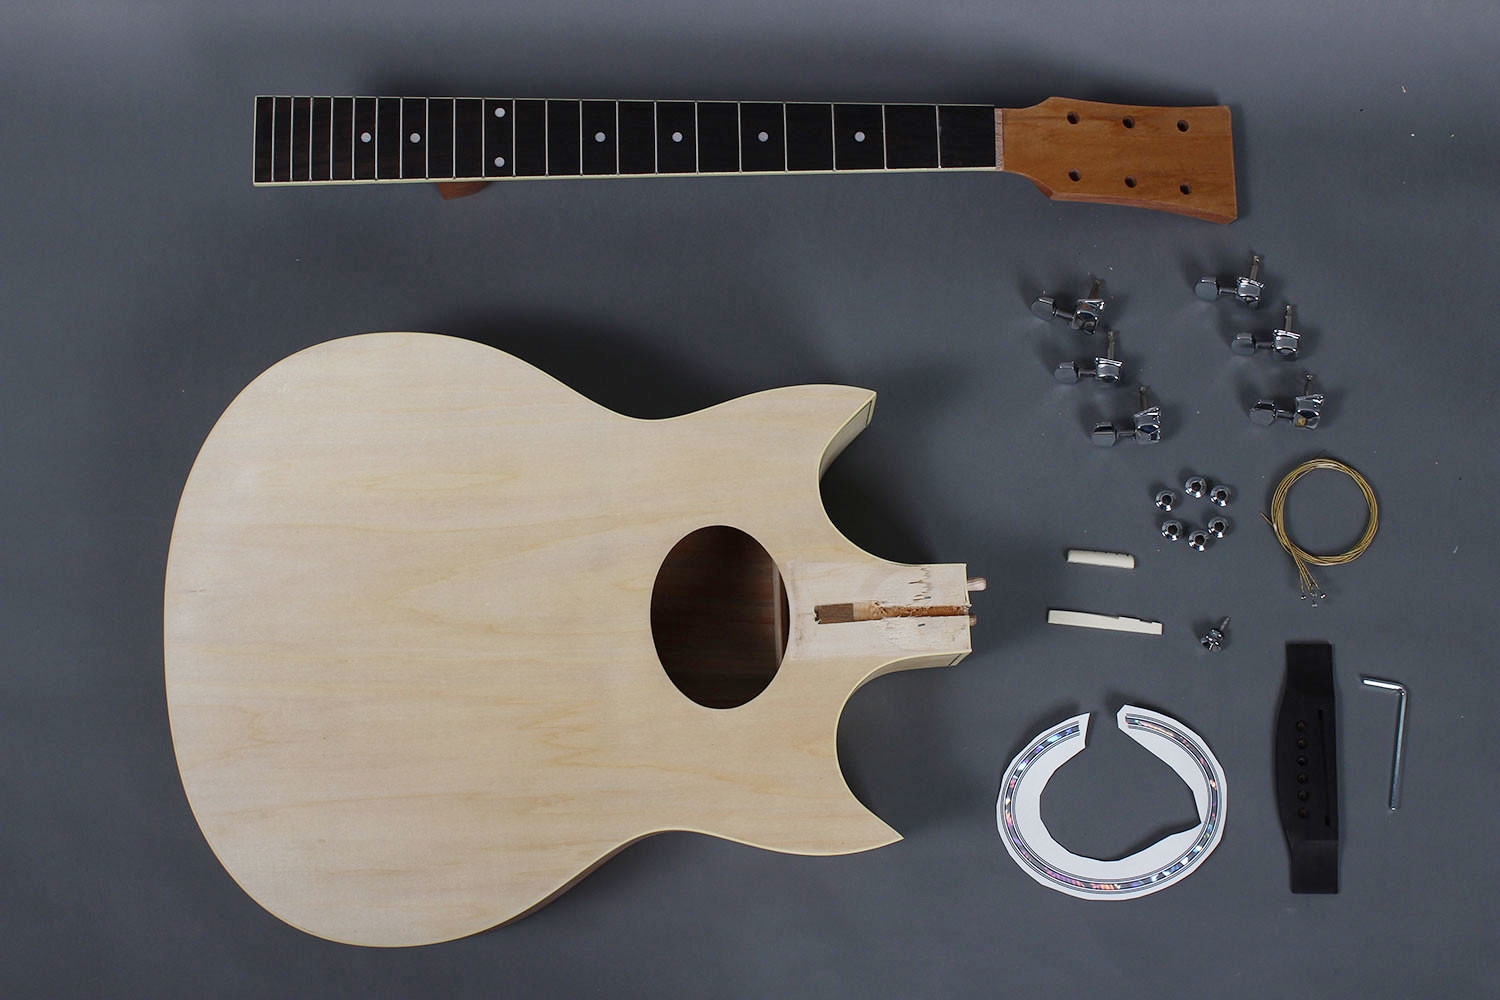 DIY Acoustic Guitar Kit
 Jumbo Double Cutaway Acoustic Guitar kit DIY GK S3991DG